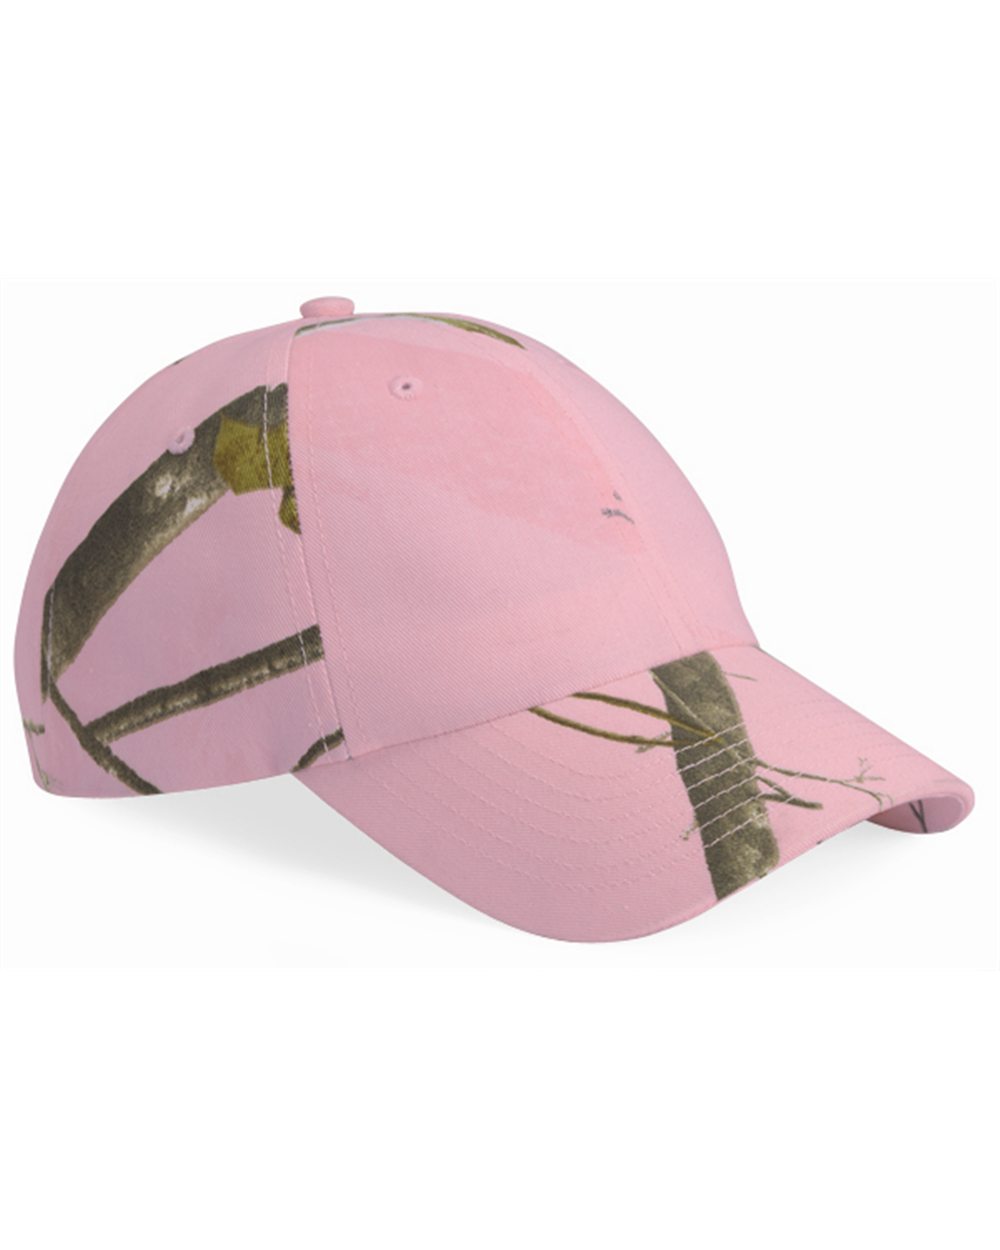 KATI SN20W Realtree All-Purpose Pink Cap